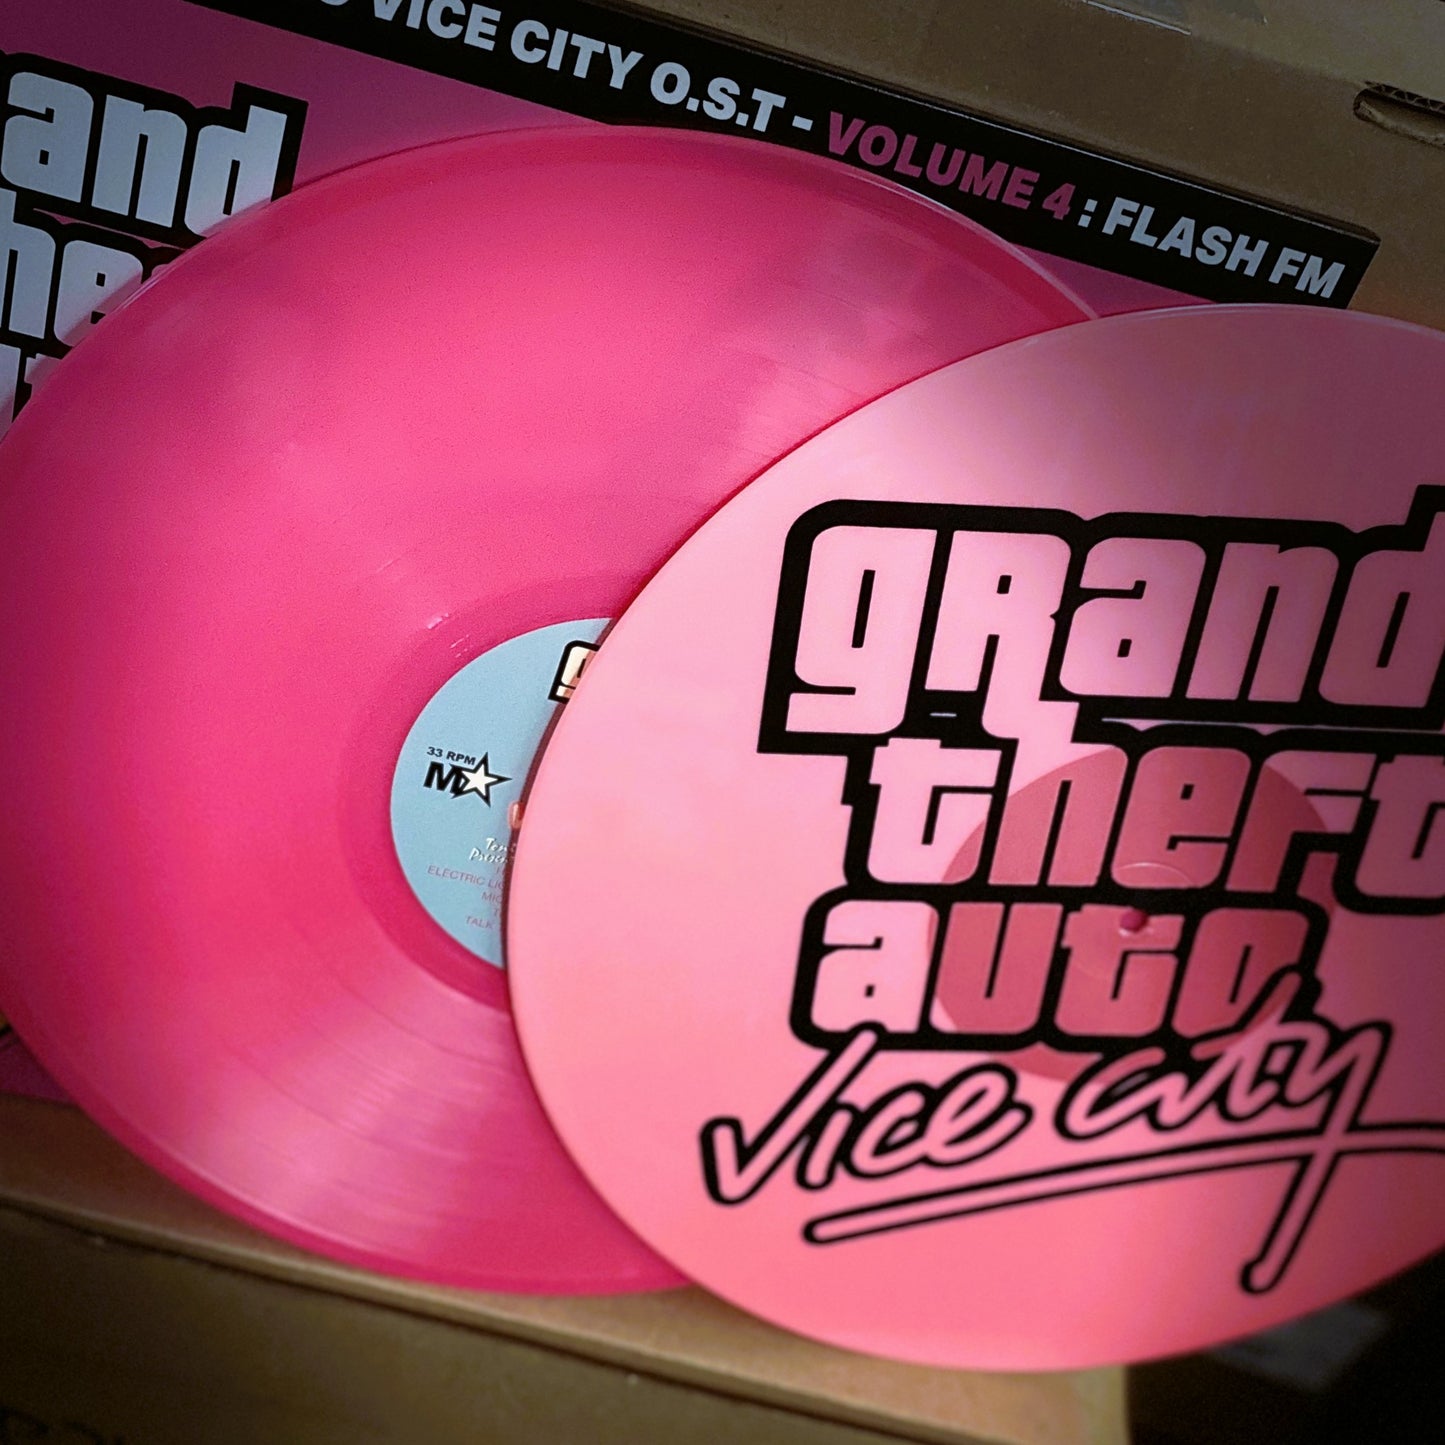 V/A – Grand Theft Auto Vice City OST - Volume 4: Flash FM 2xLP (pink vinyl)